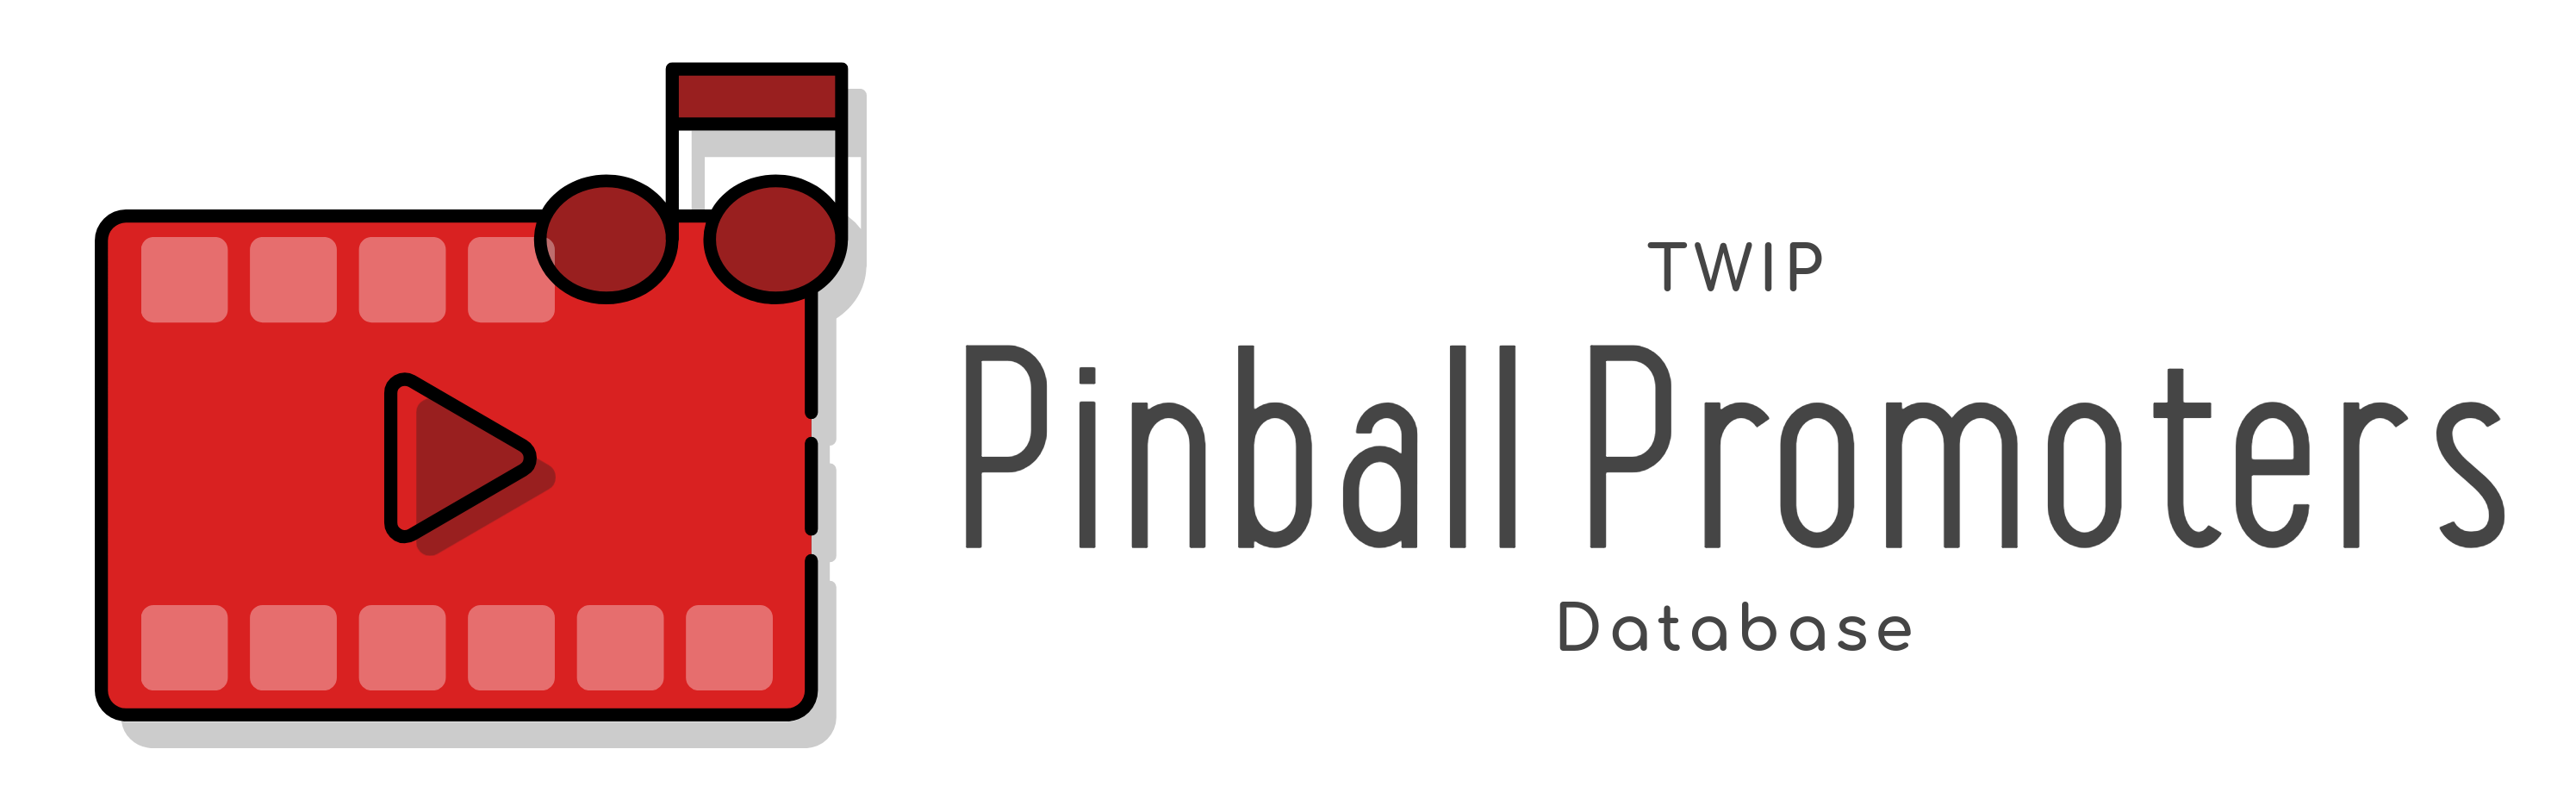 TWIP Pinball Promoters Database